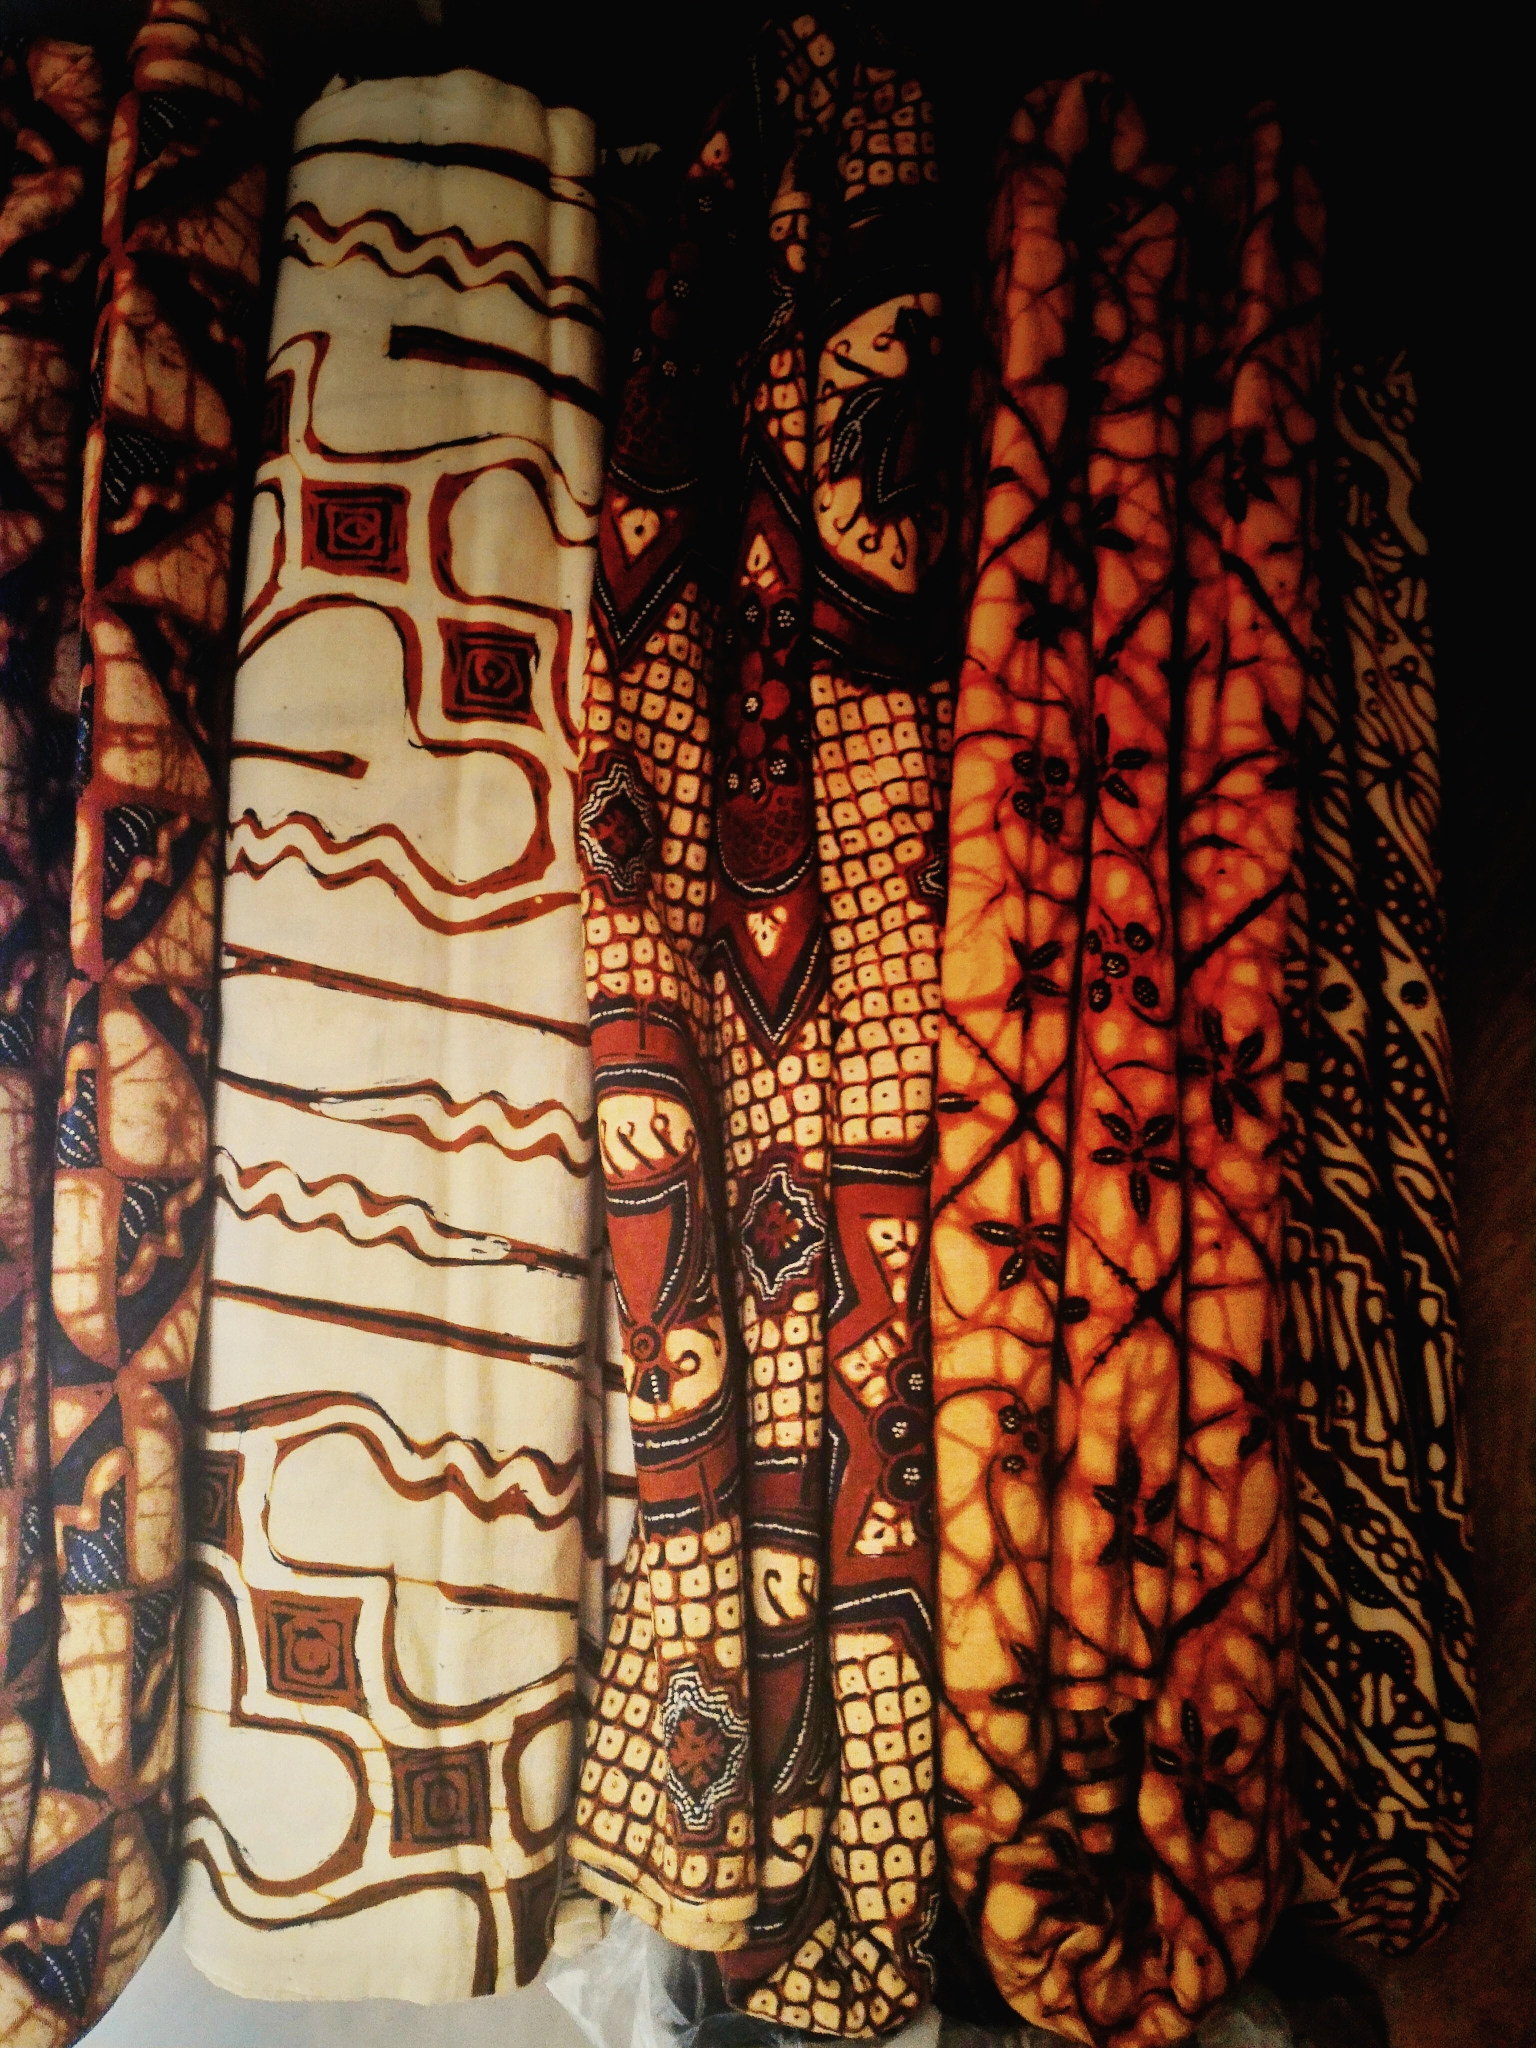 ASUS Z008D sample photo. Heritage batik photography